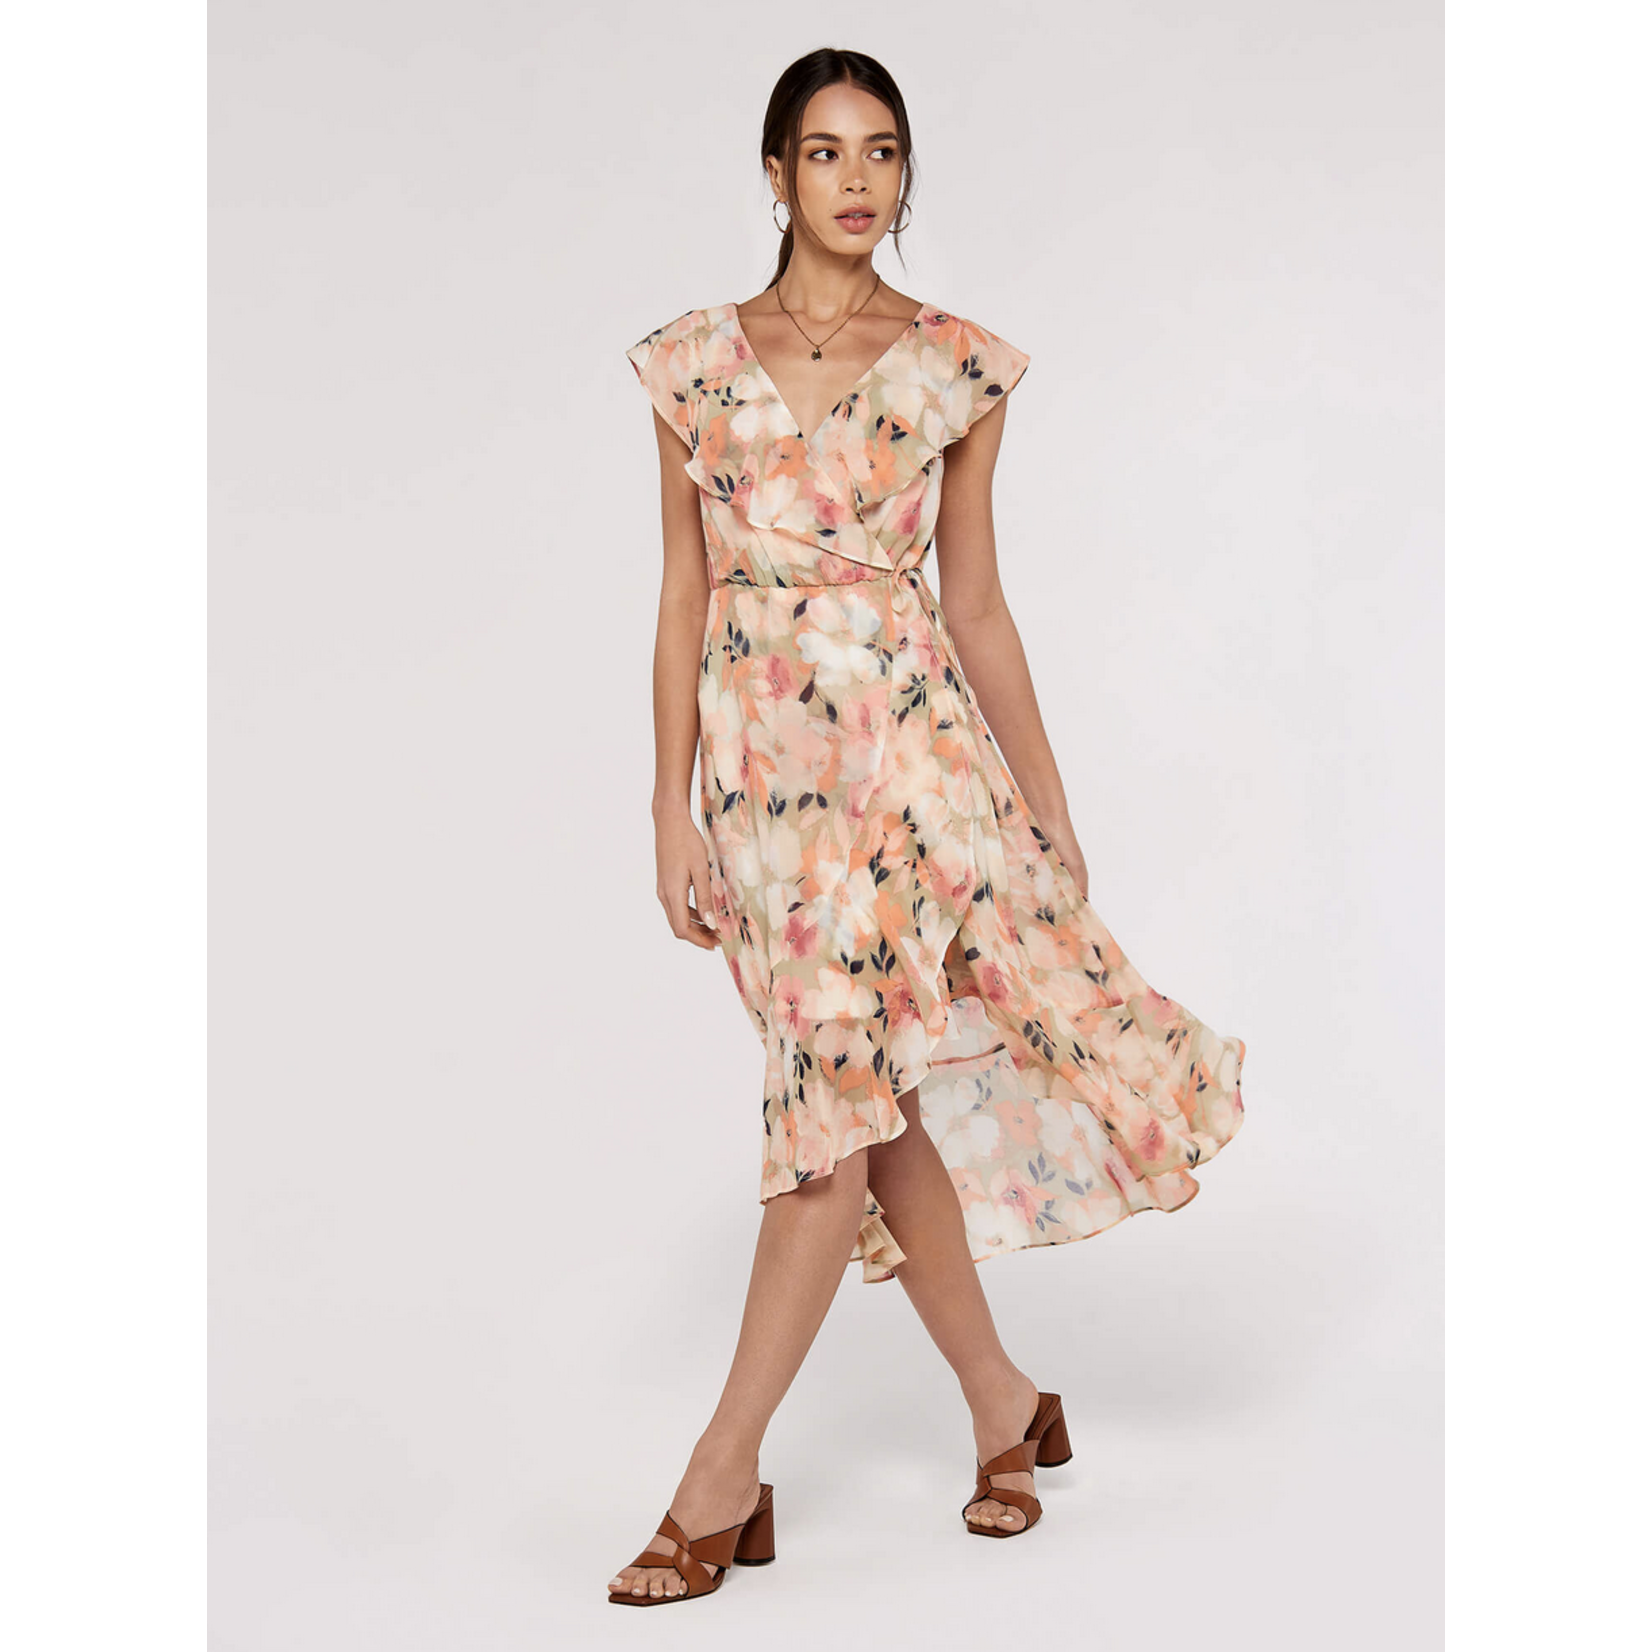 Apricot blurred floral ruffle wrap dress